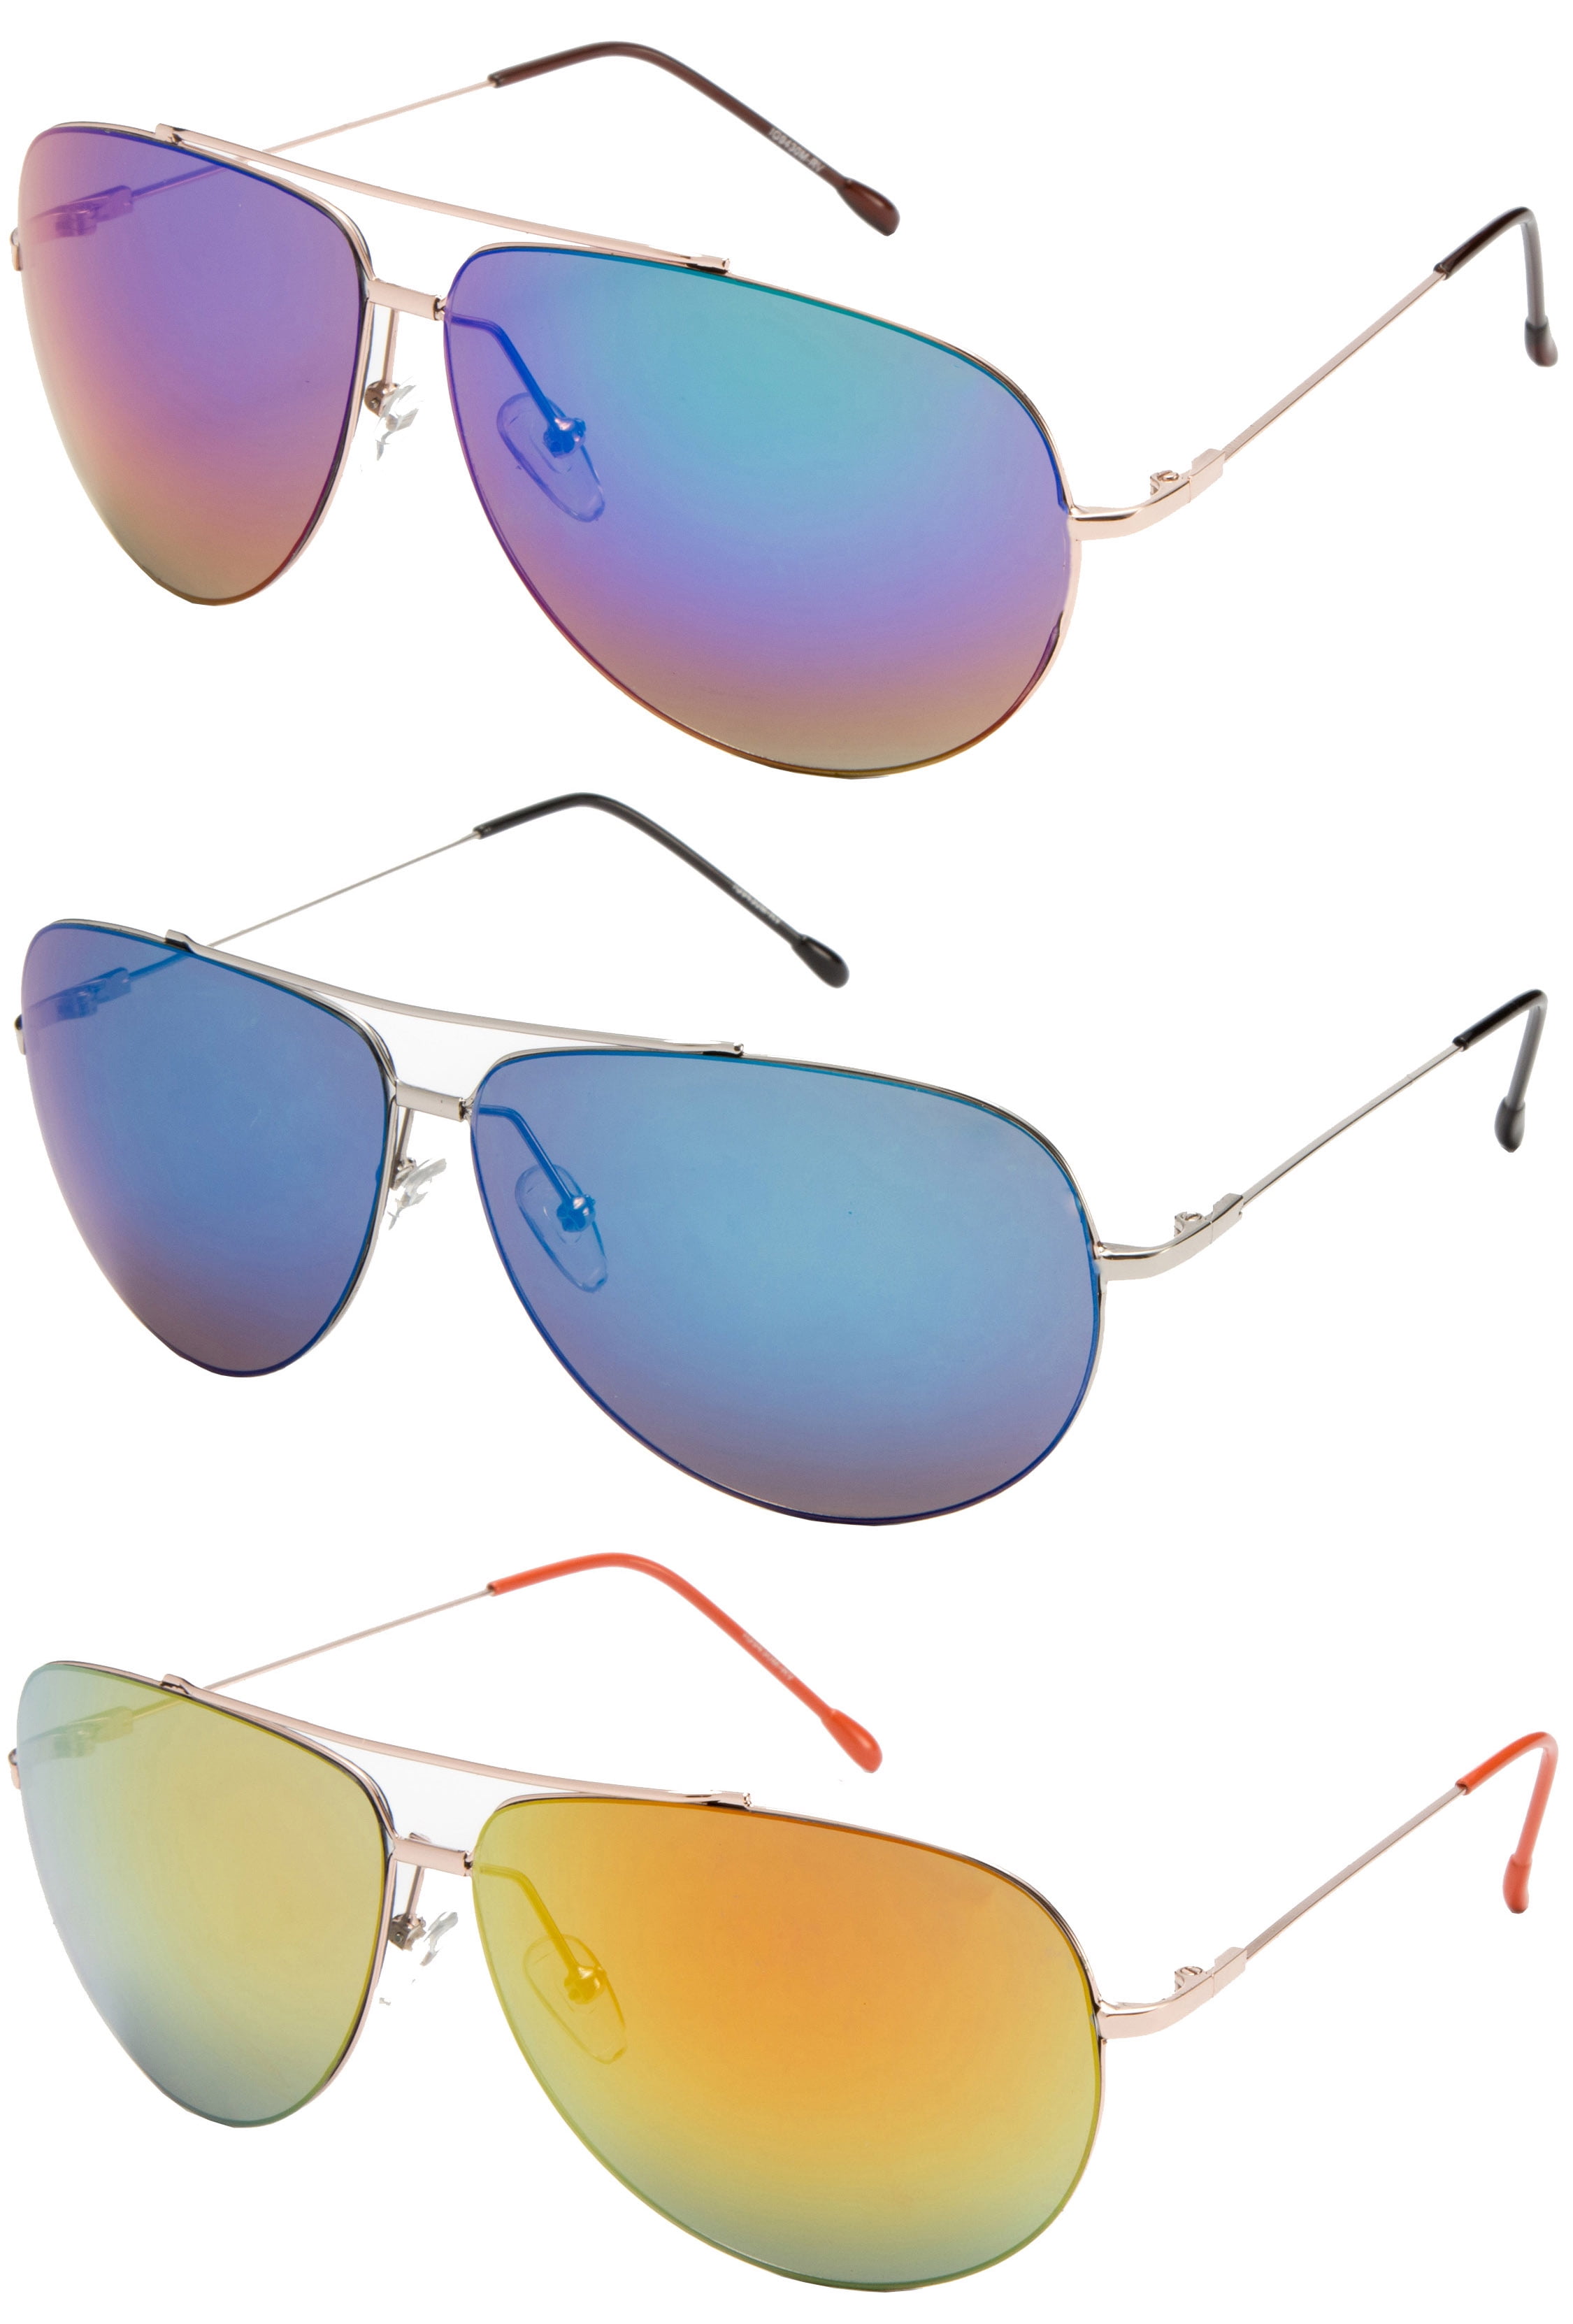 Premium Full Flash Mirrored Spring Temple Aviator Sunglasses GOLD SET 3 Pack 